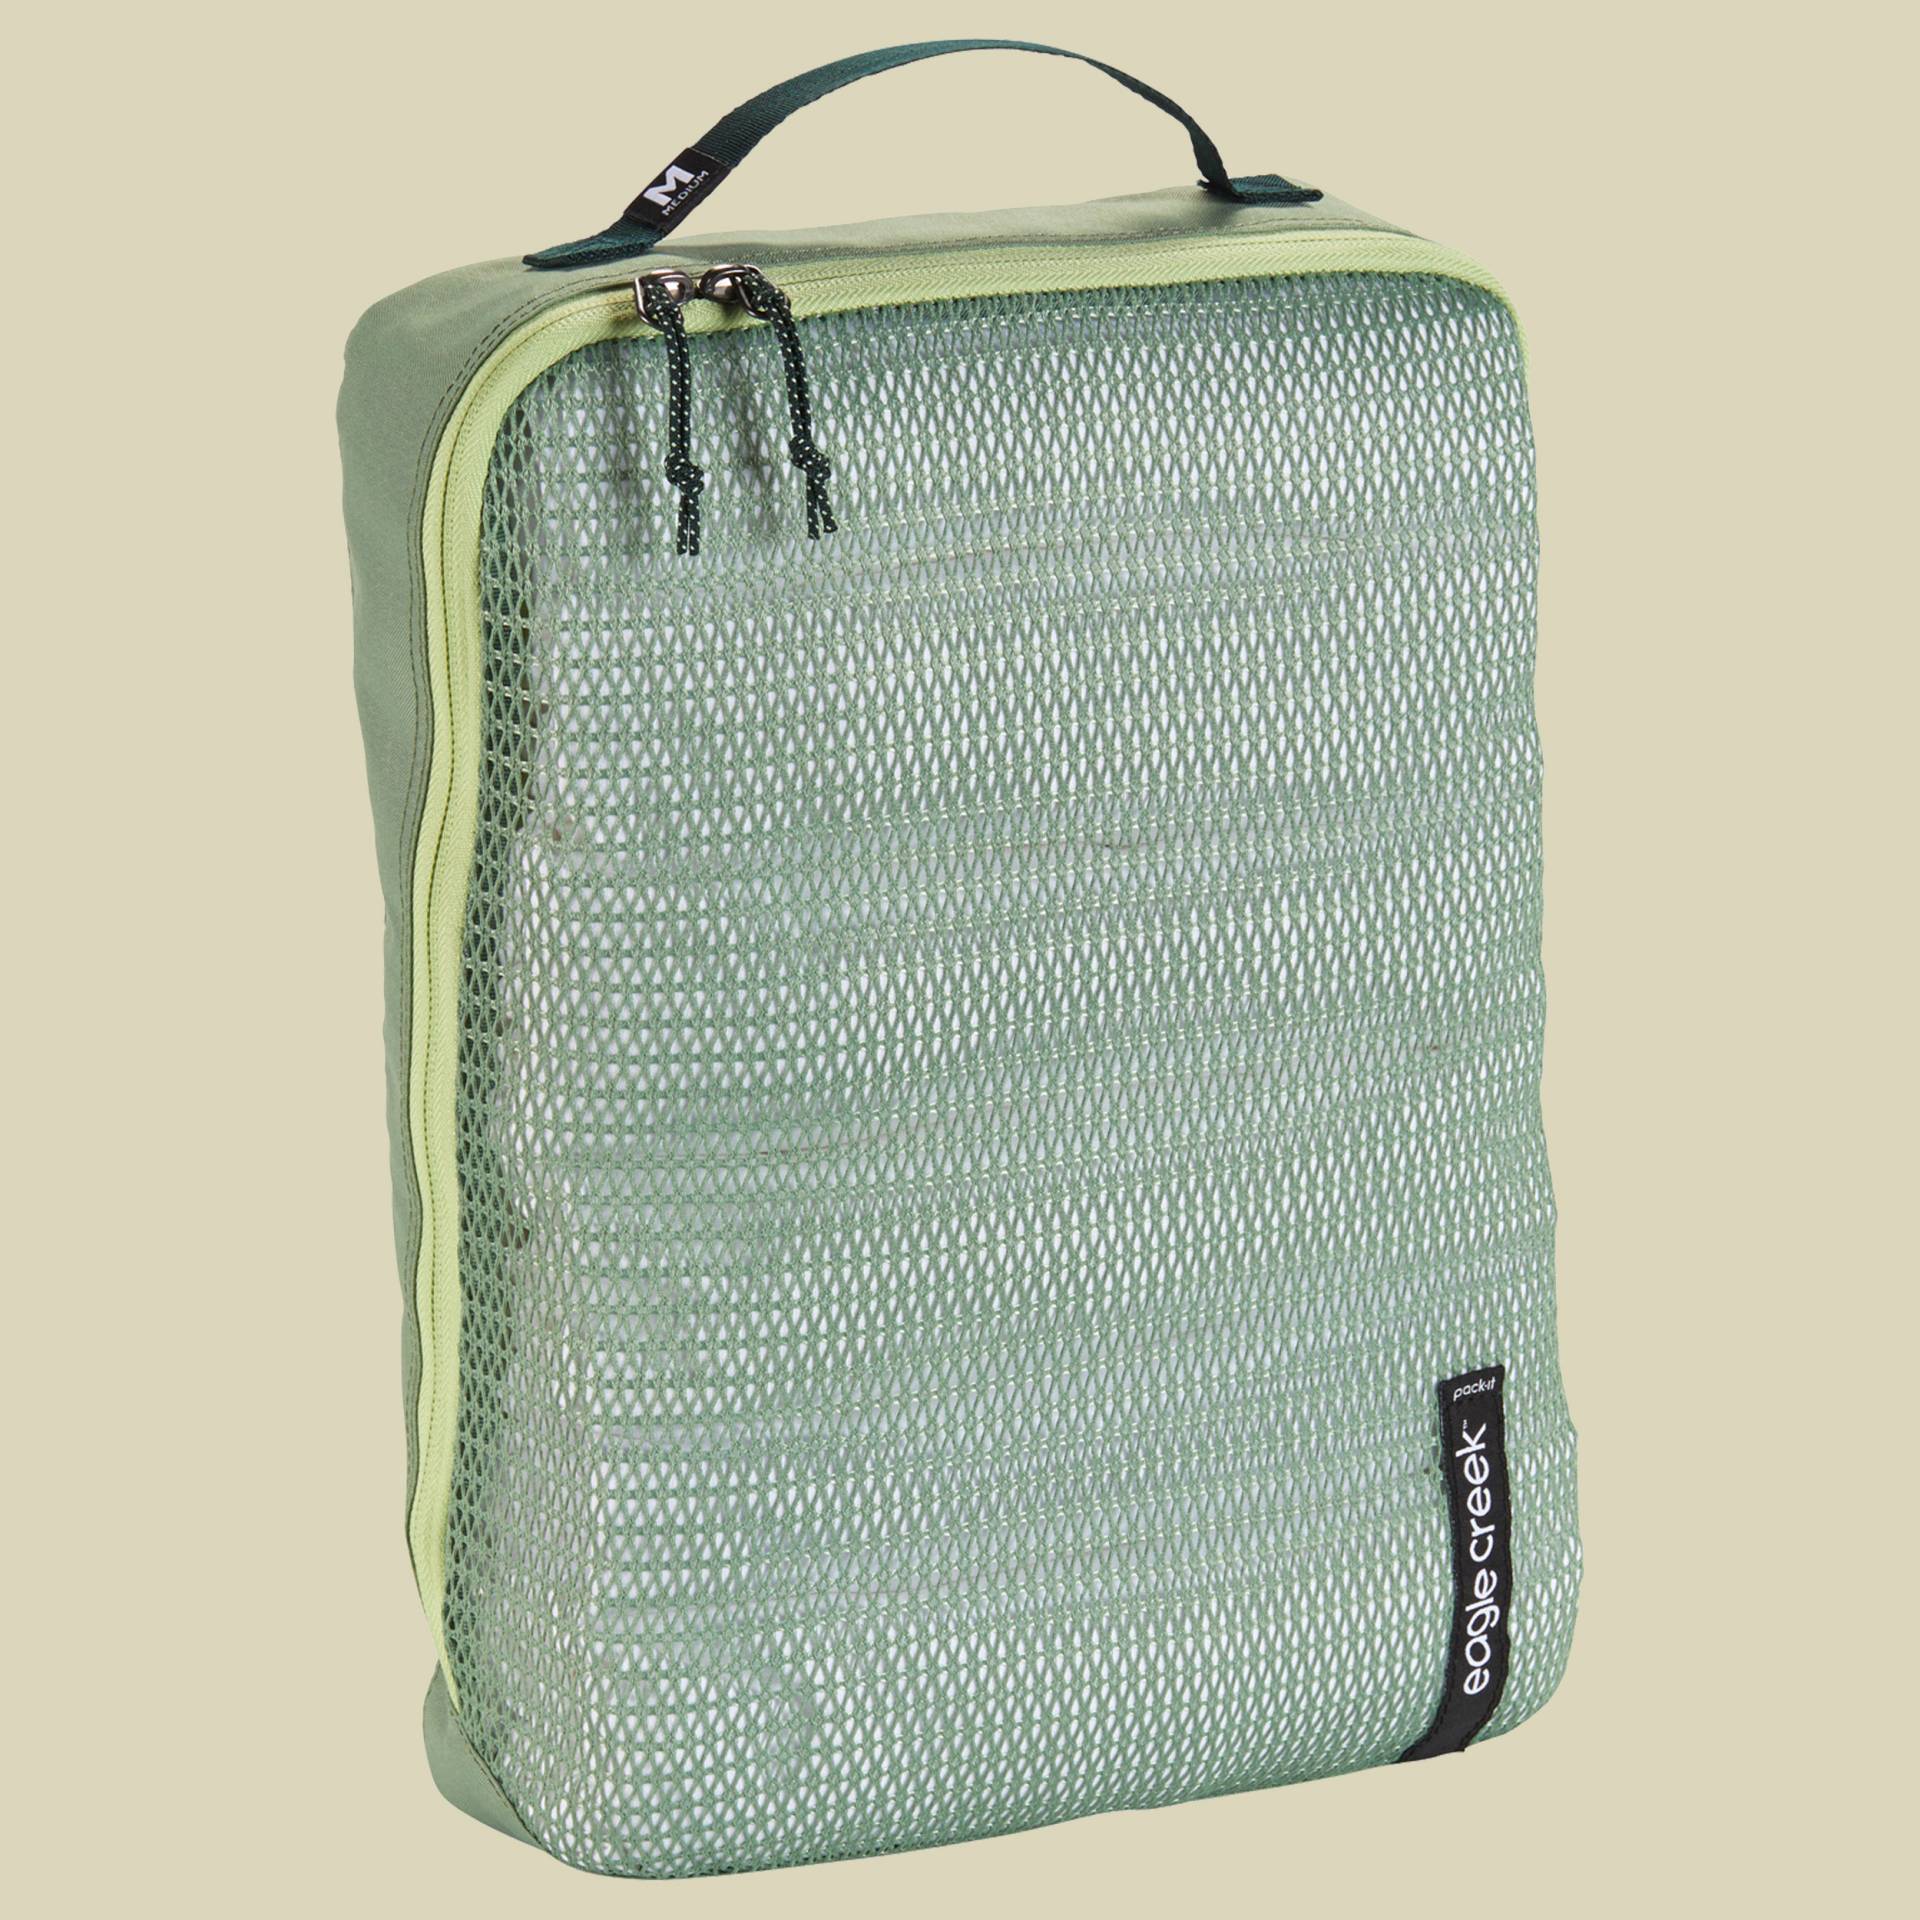 Pack-It Reveal Cube M Größe M Farbe mossy green von Eagle Creek